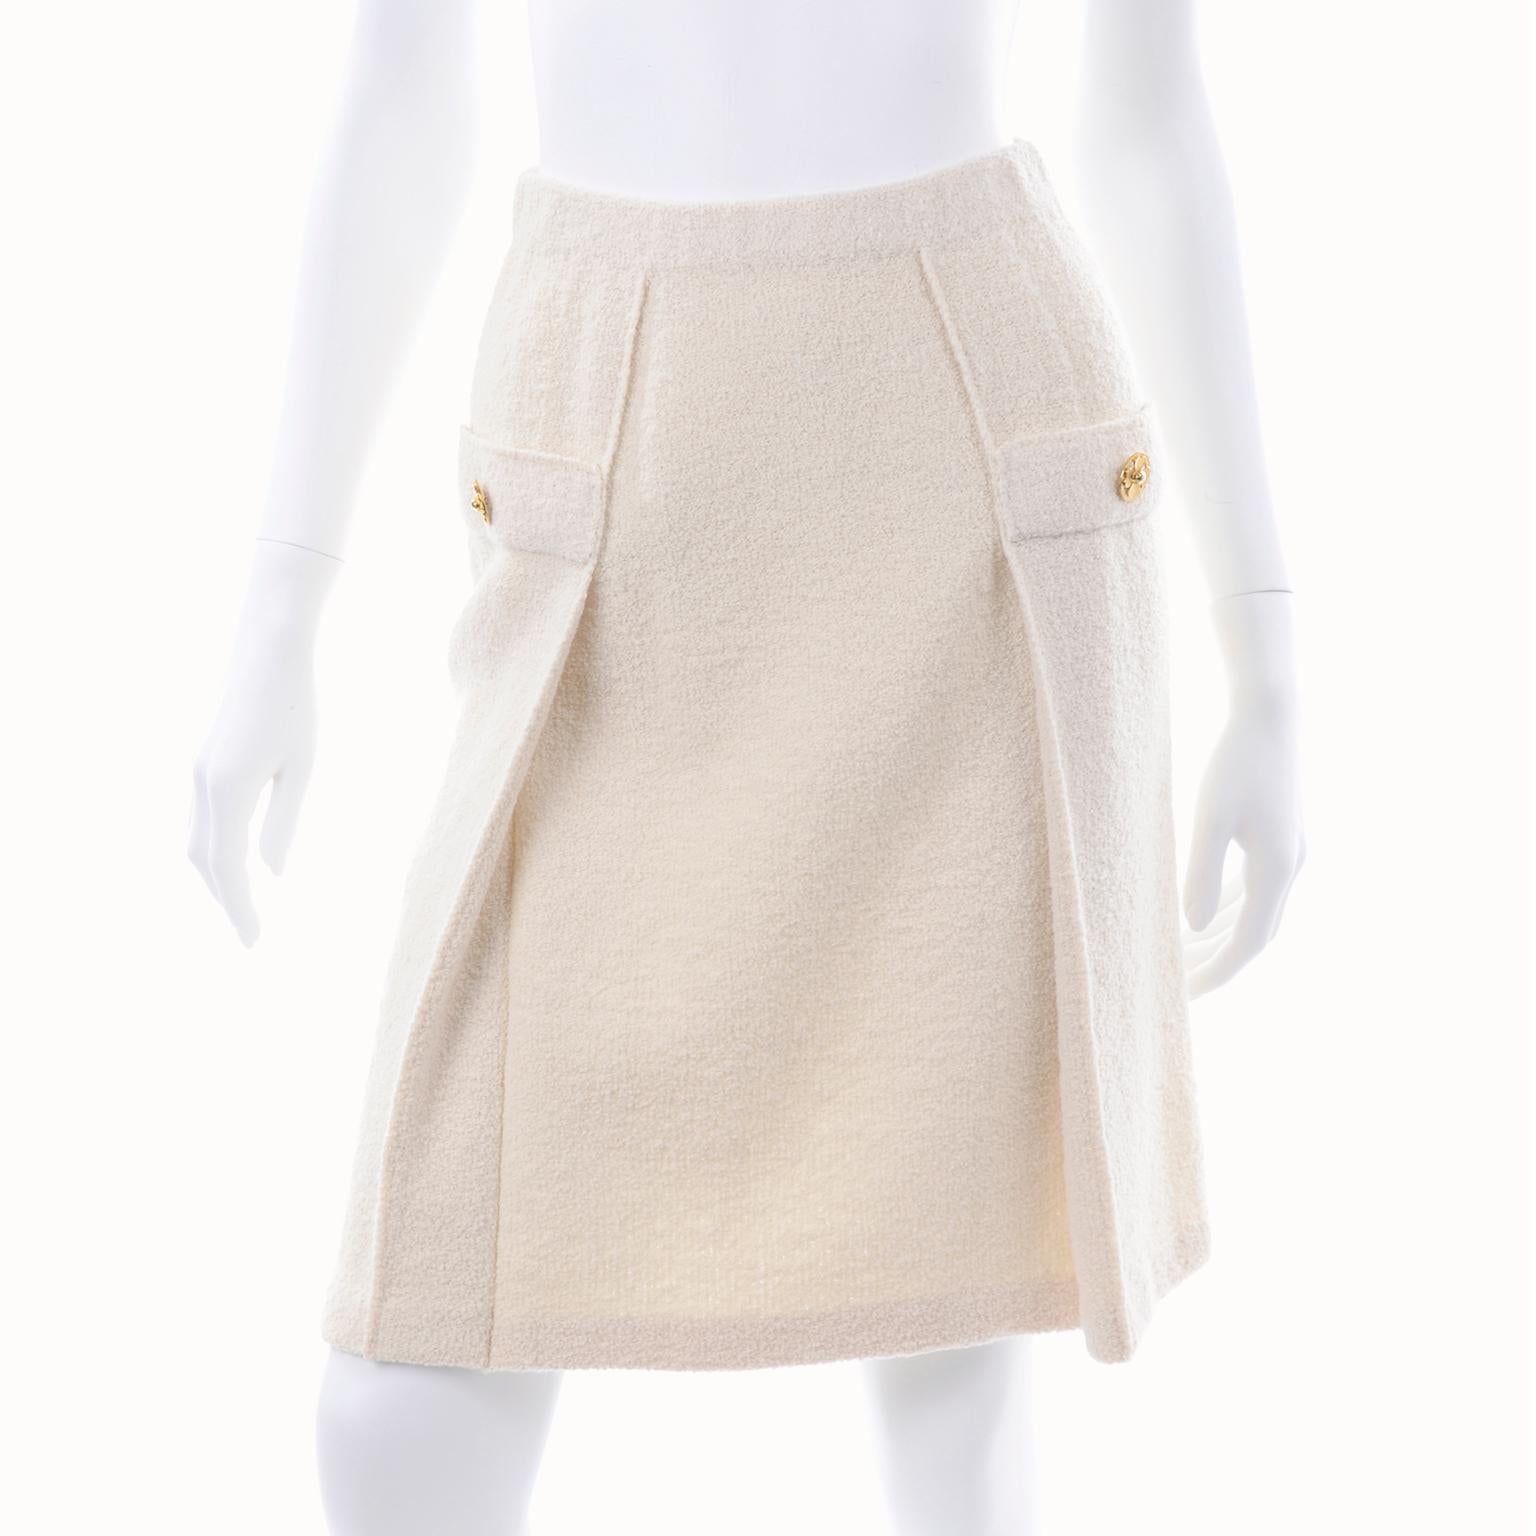 Adolfo Sardina Vintage Ivory Cream Knit Skirt & Jacket Suit Gold Clover Buttons 1